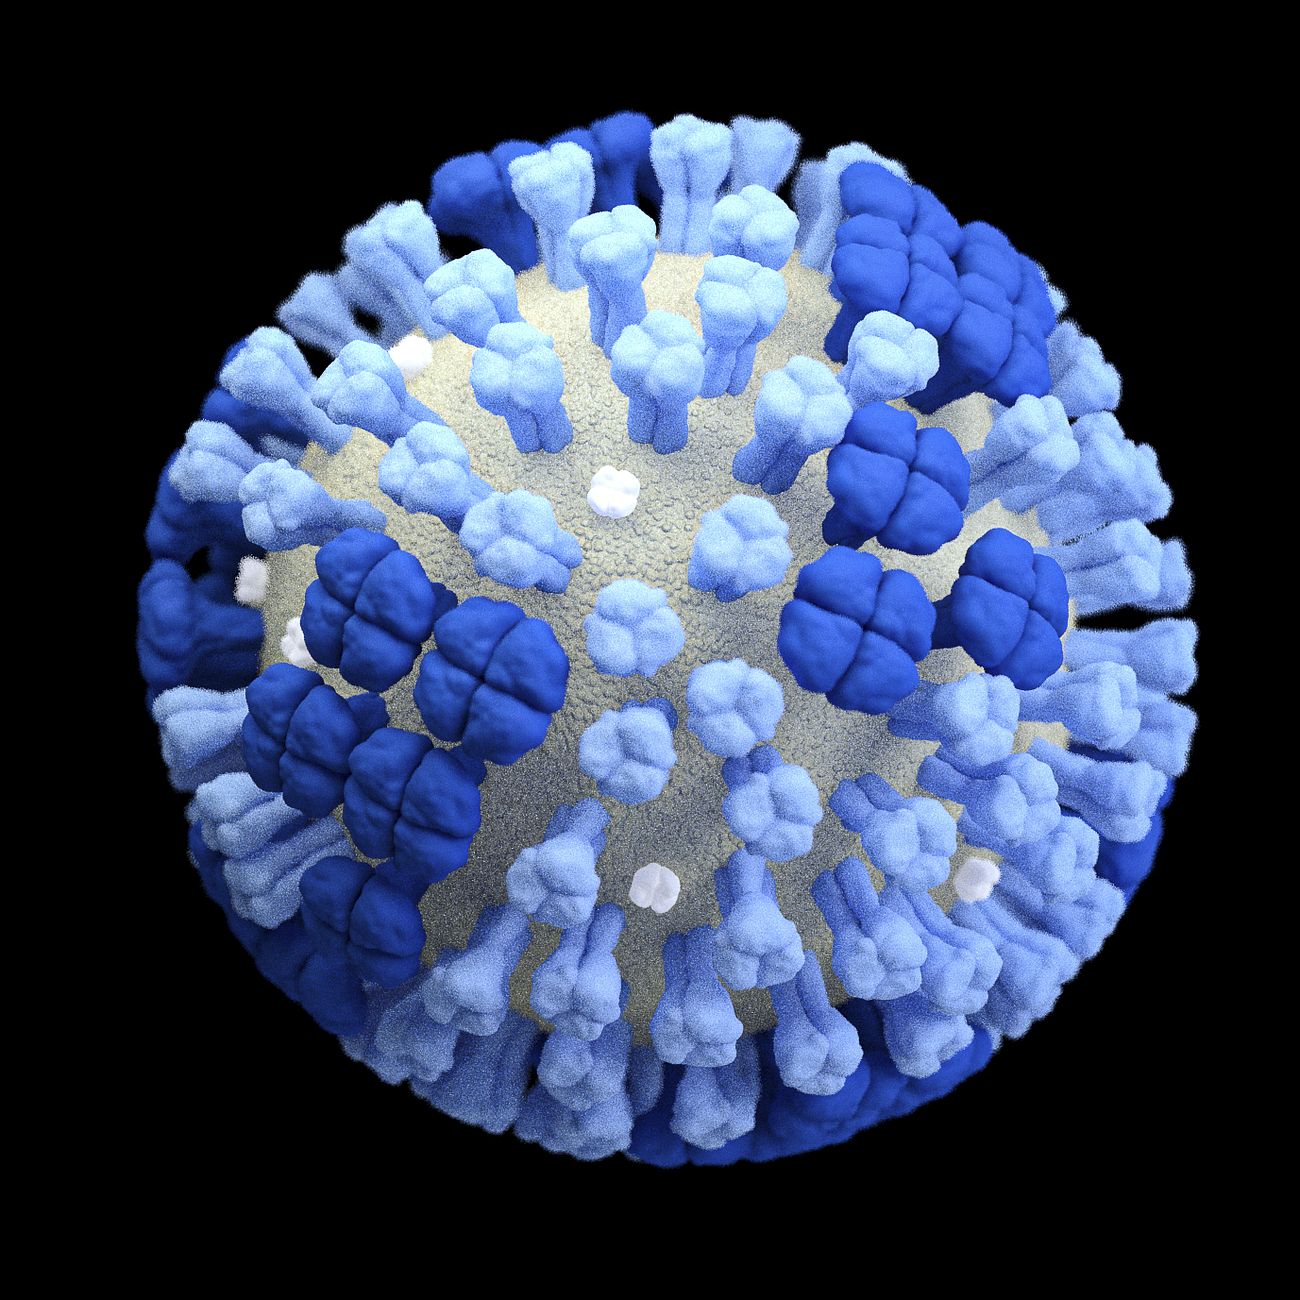 Influenza virus illustration in semi-